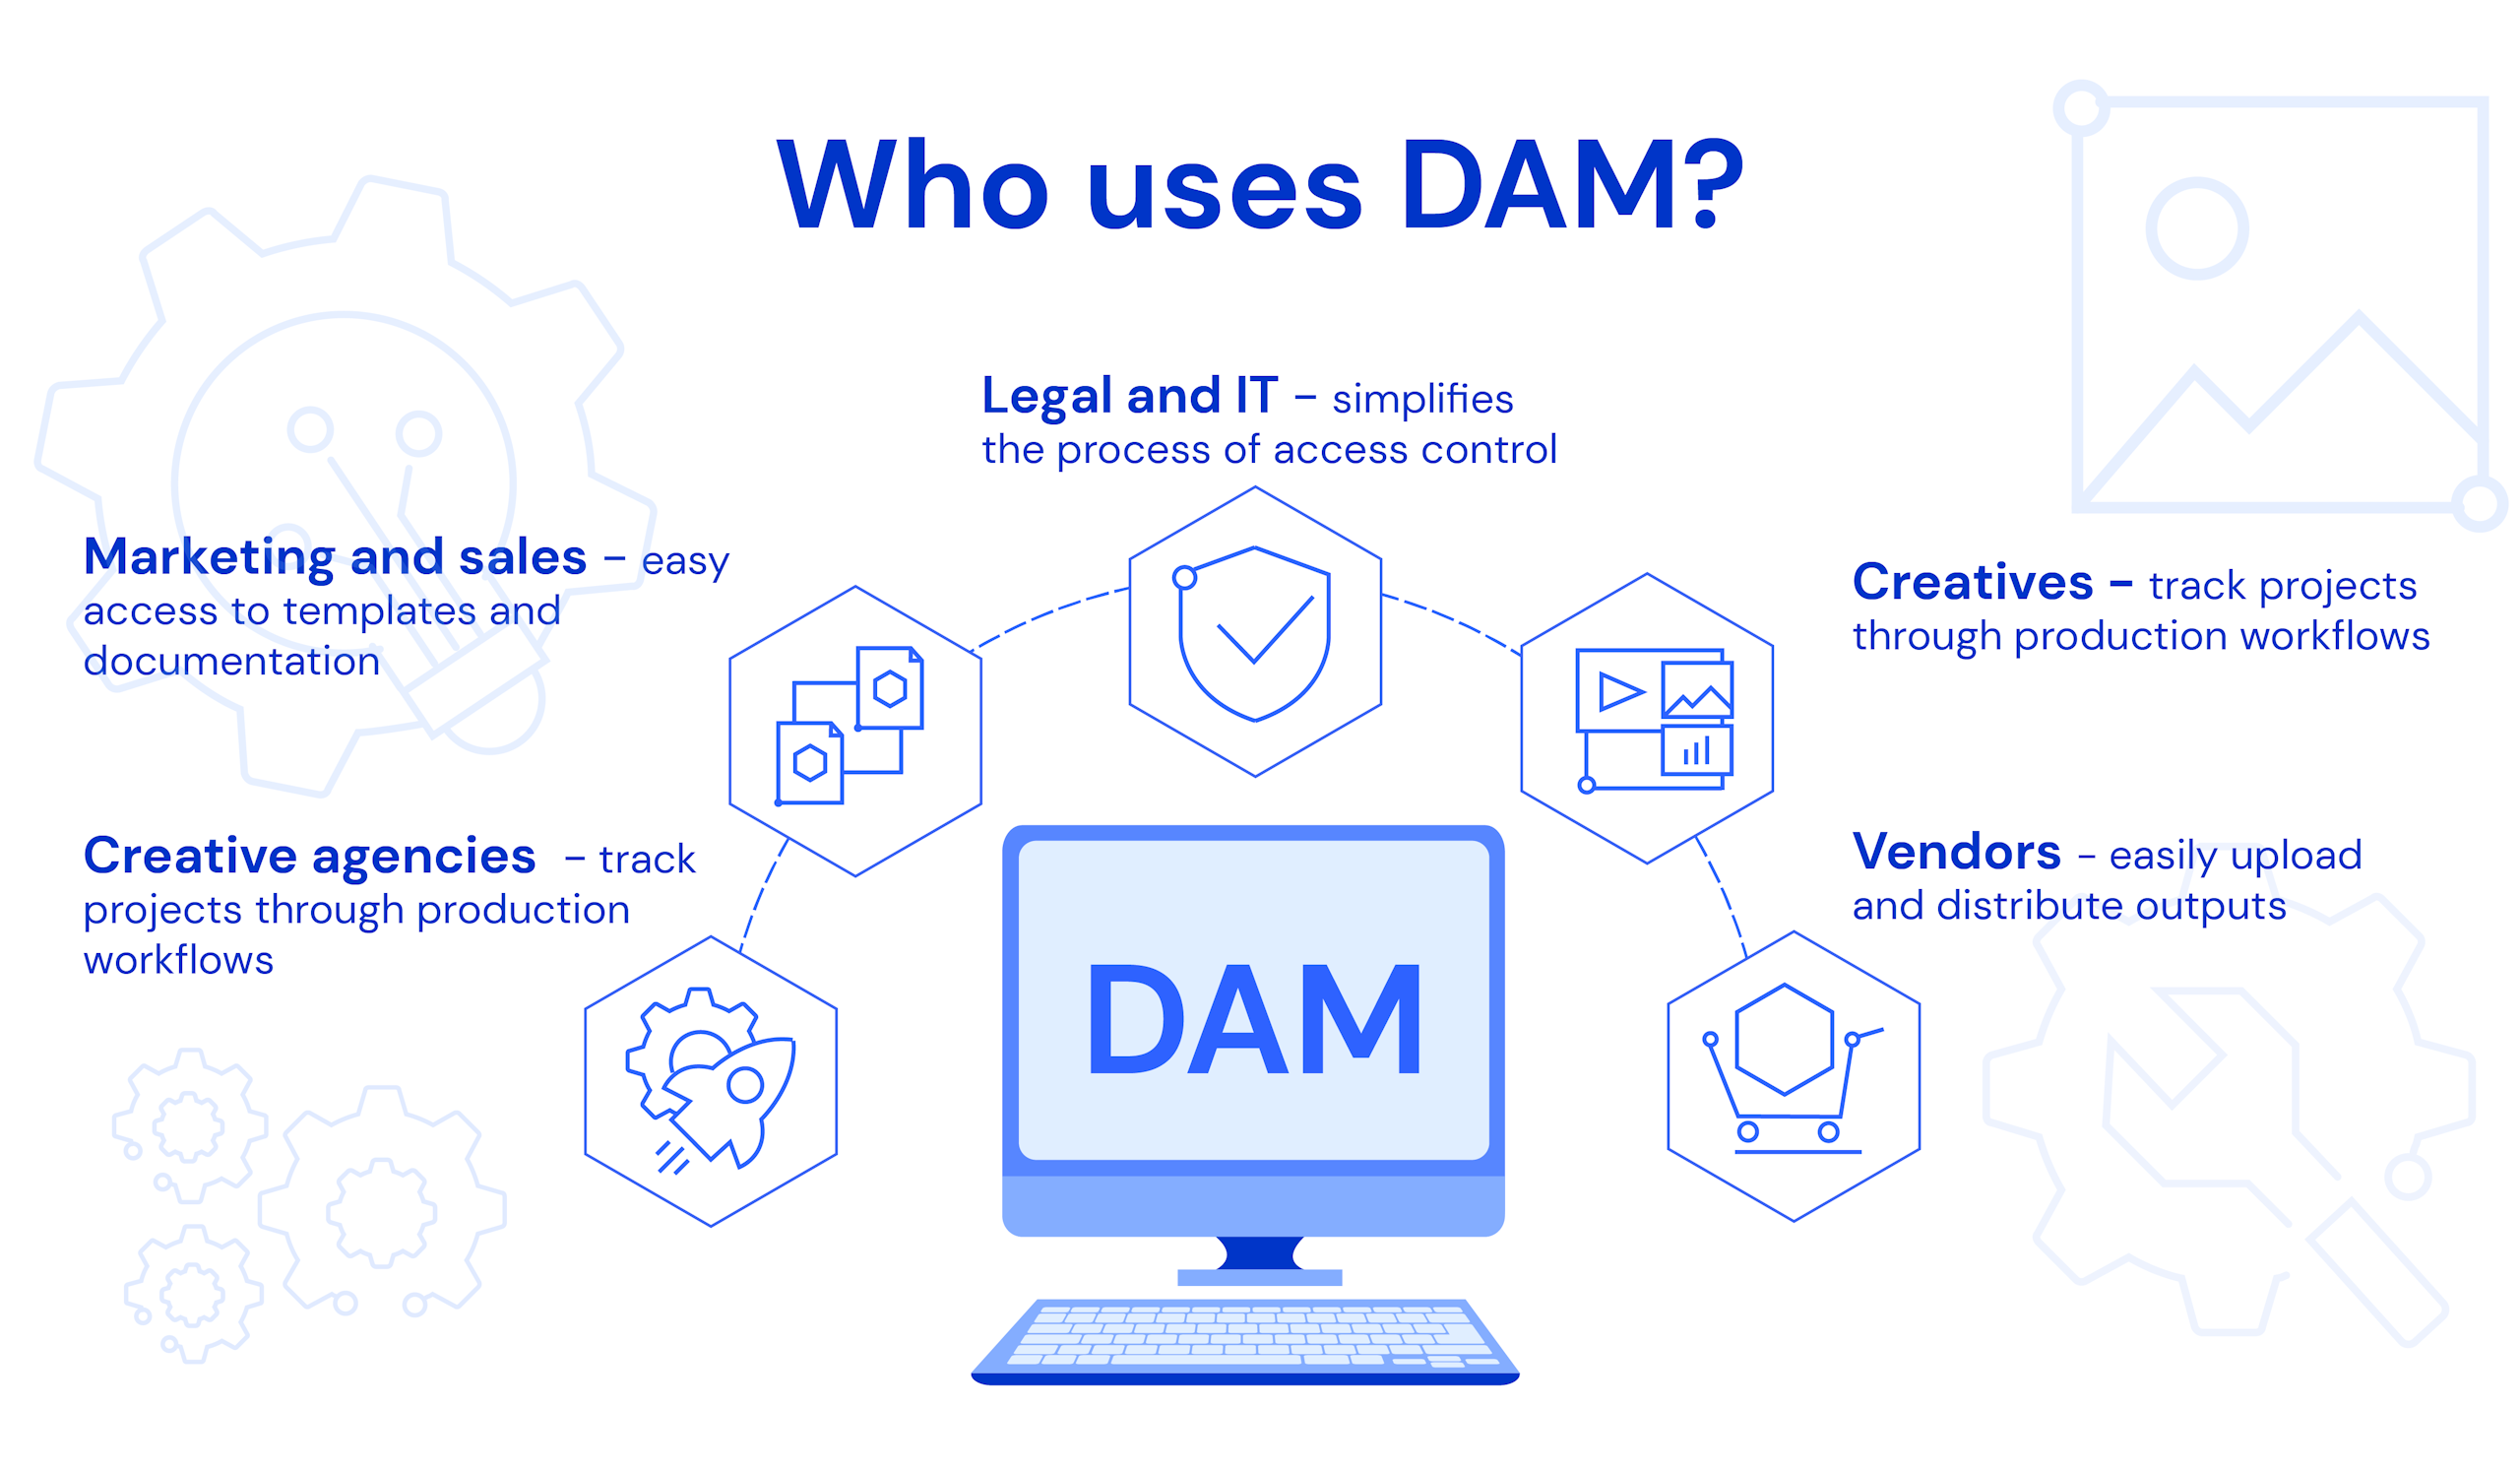 Who uses a DAM